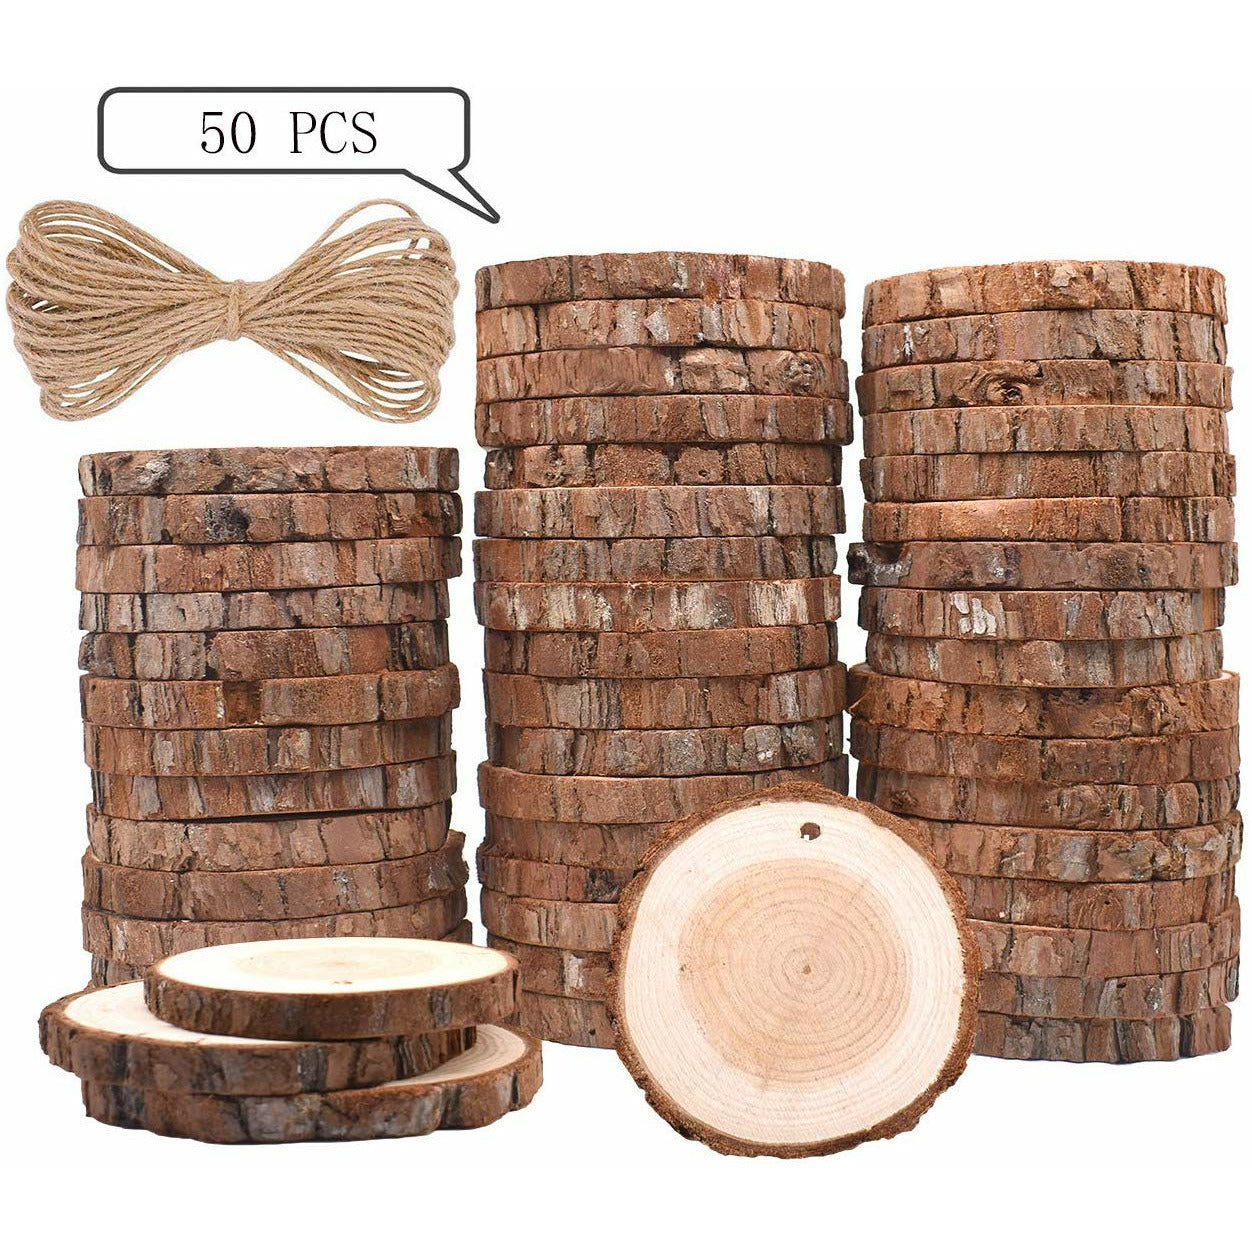 50pcs Natural Wood Slices Round Circle Tree Bark Log 2-7cm